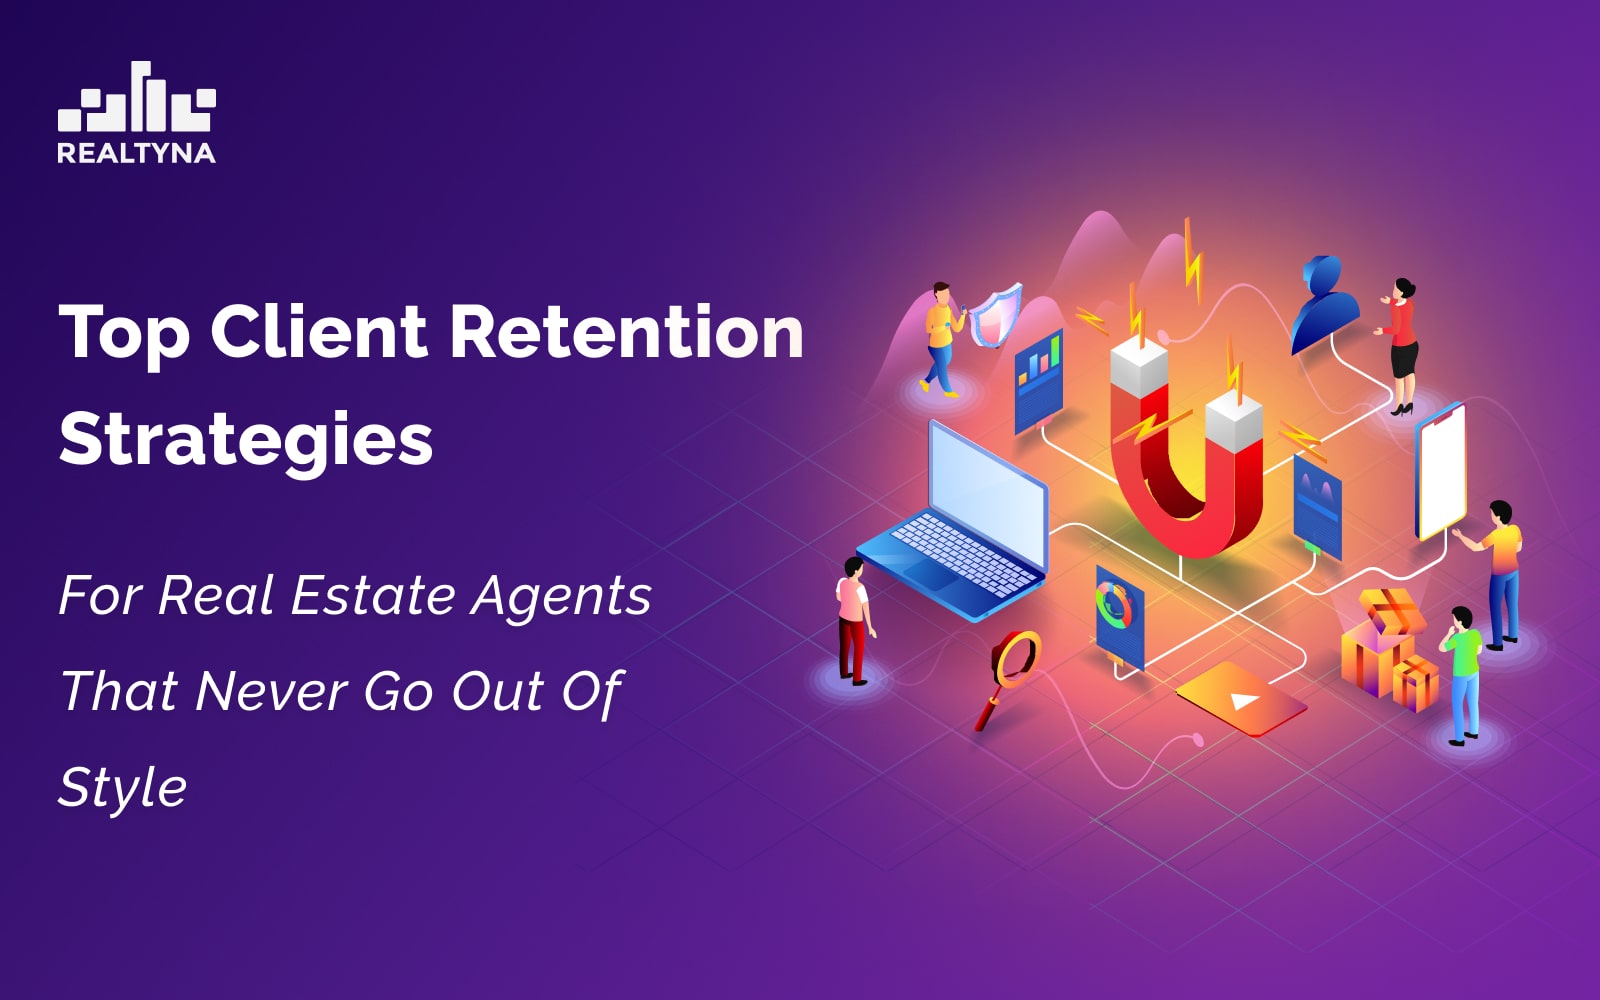 rna top client retention strategies